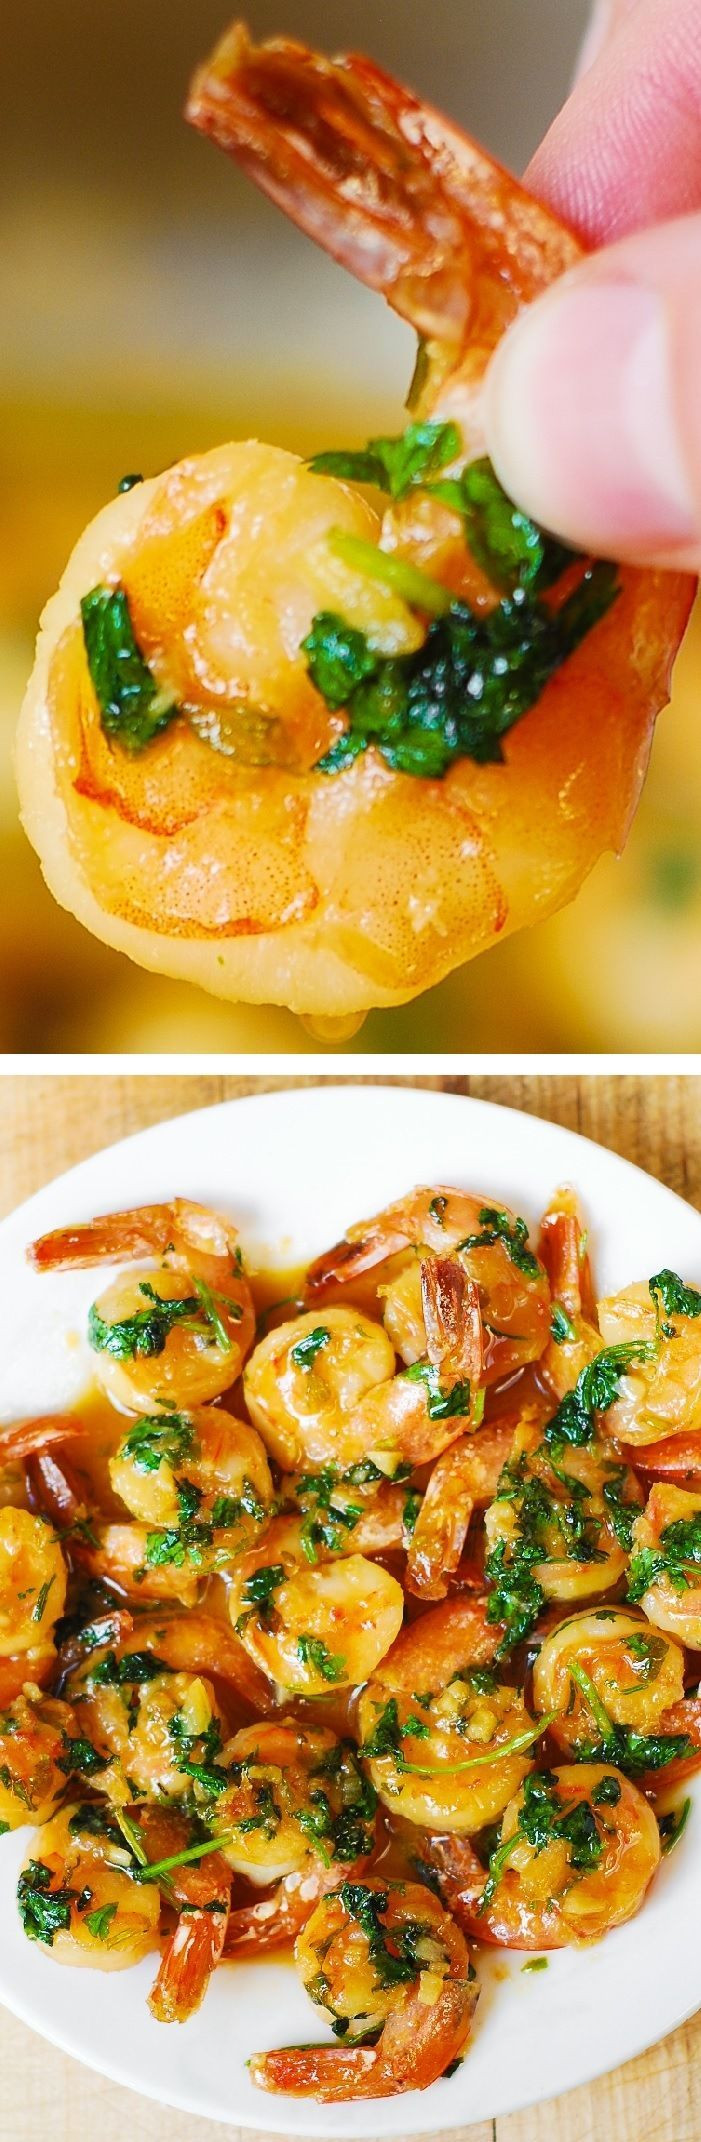 Recipes For Low Cholesterol
 Cilantro Lime Honey Garlic Shrimp easy healthy gluten